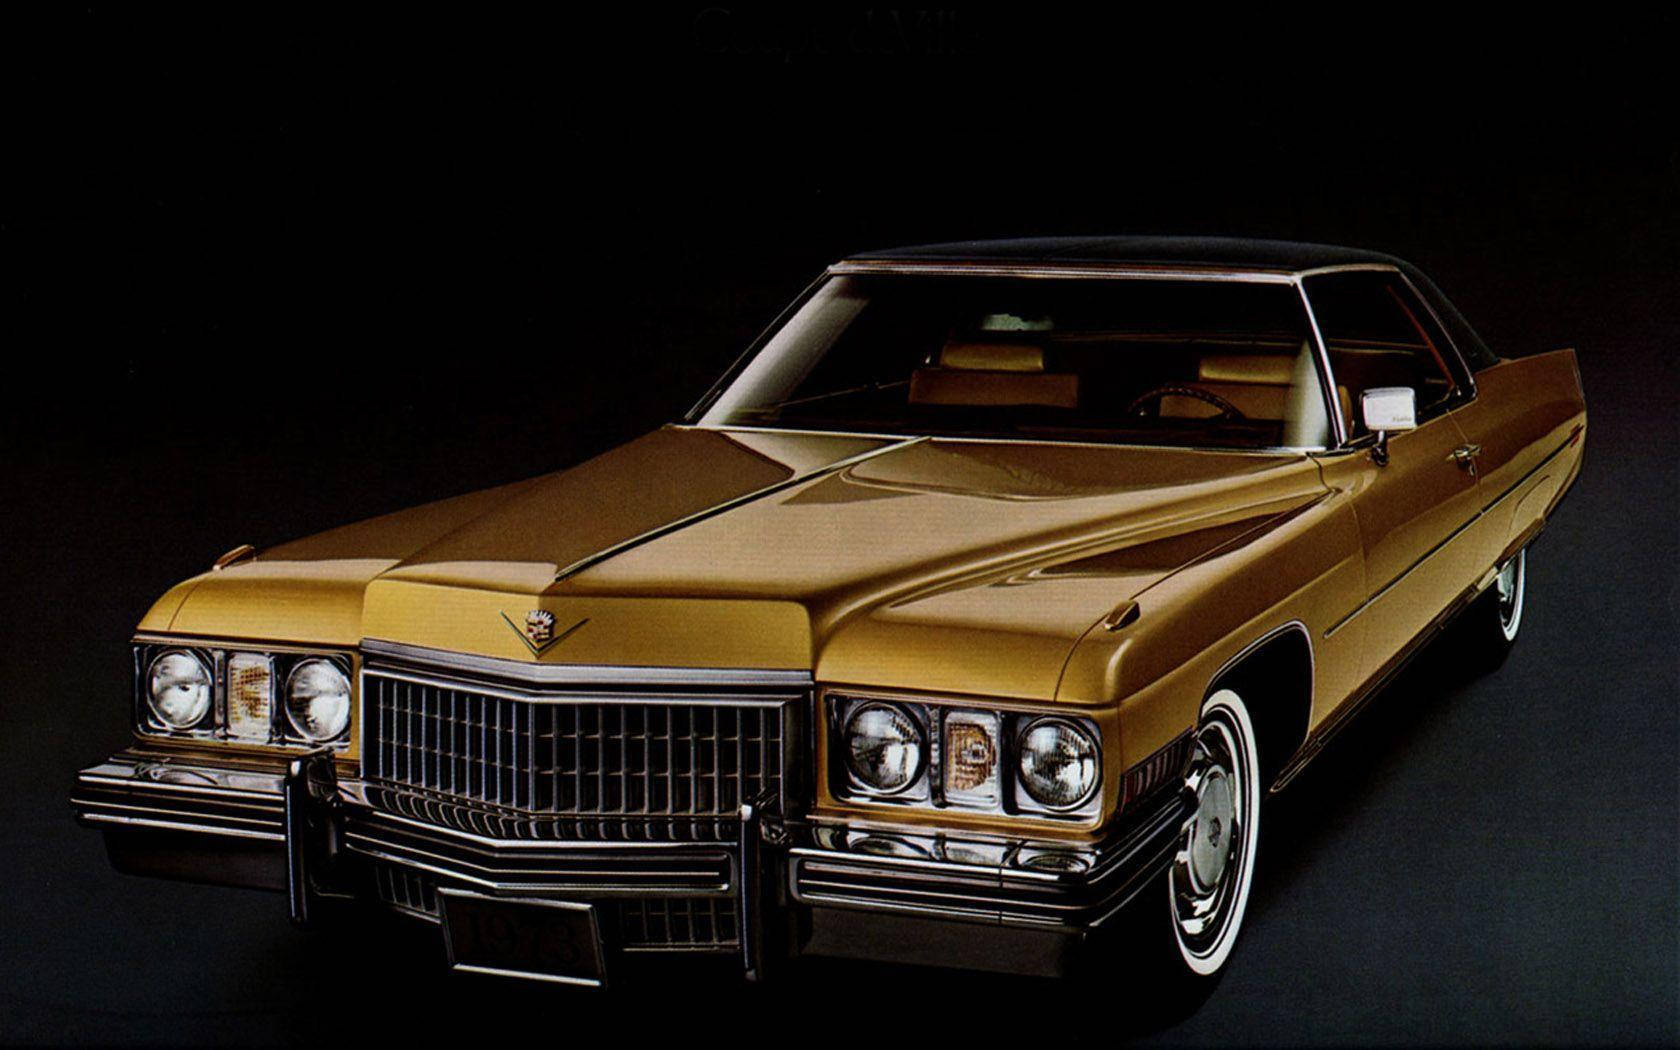 Classic Brown Cadillac Car